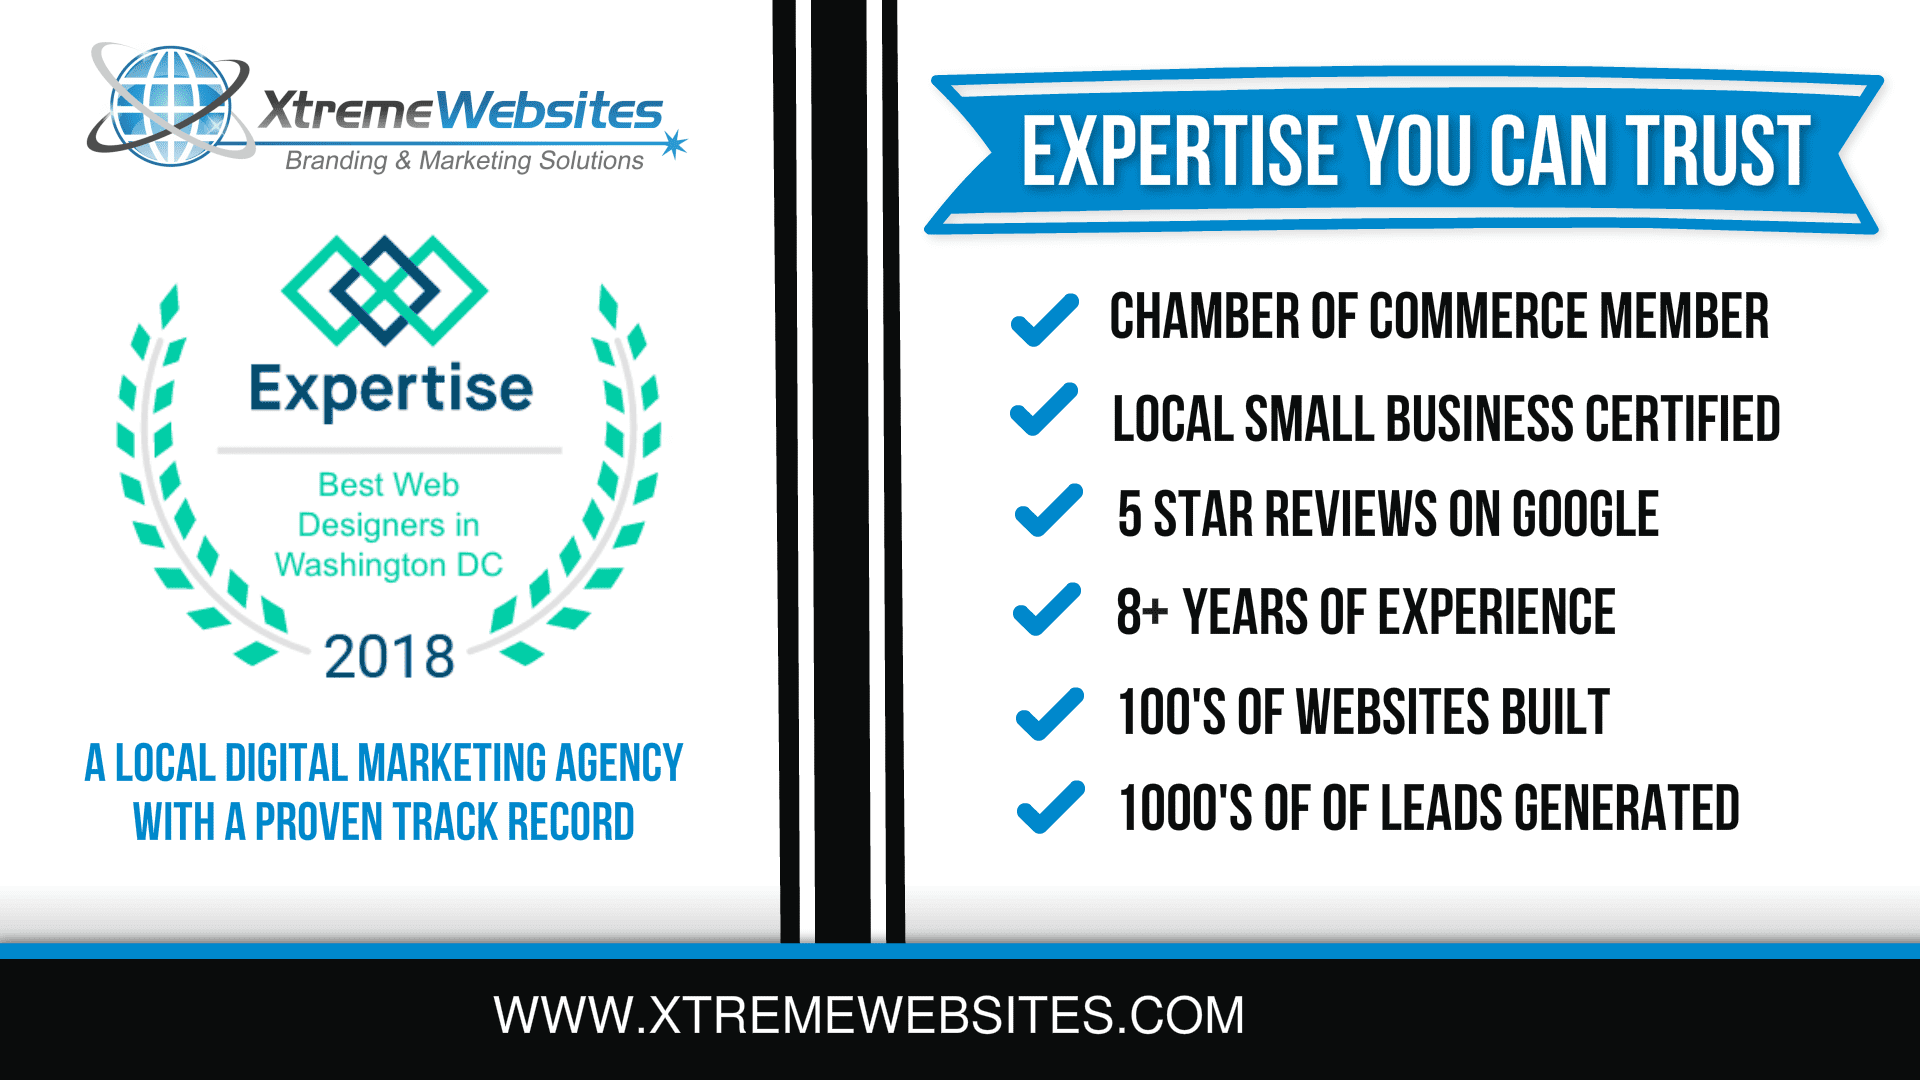 Xtreme Websites